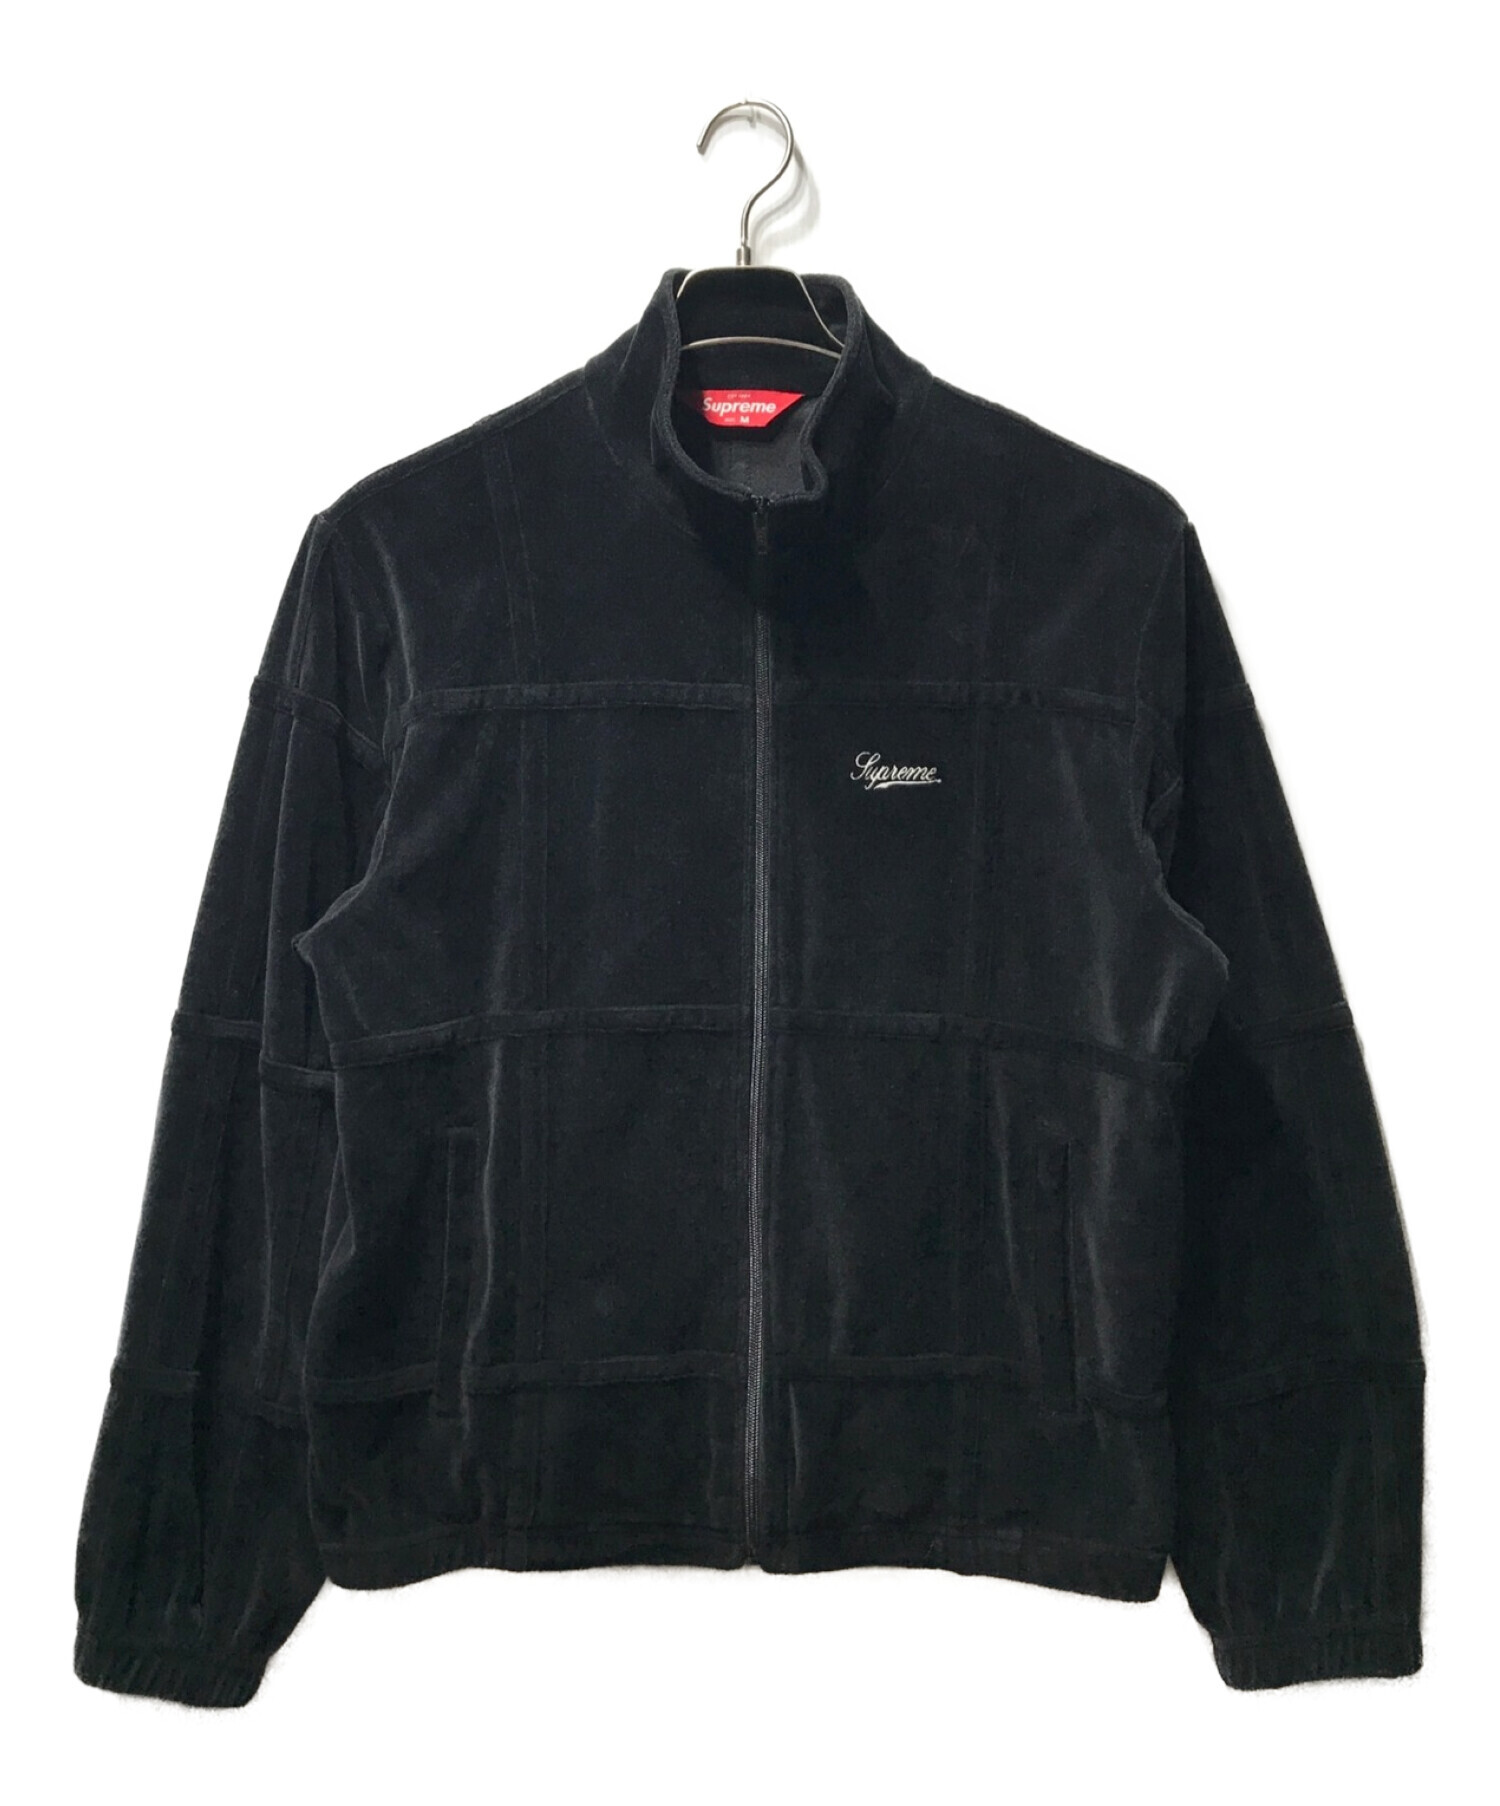 Supreme (シュプリーム) Grid Taping Velour Jacket ブラック サイズ:M